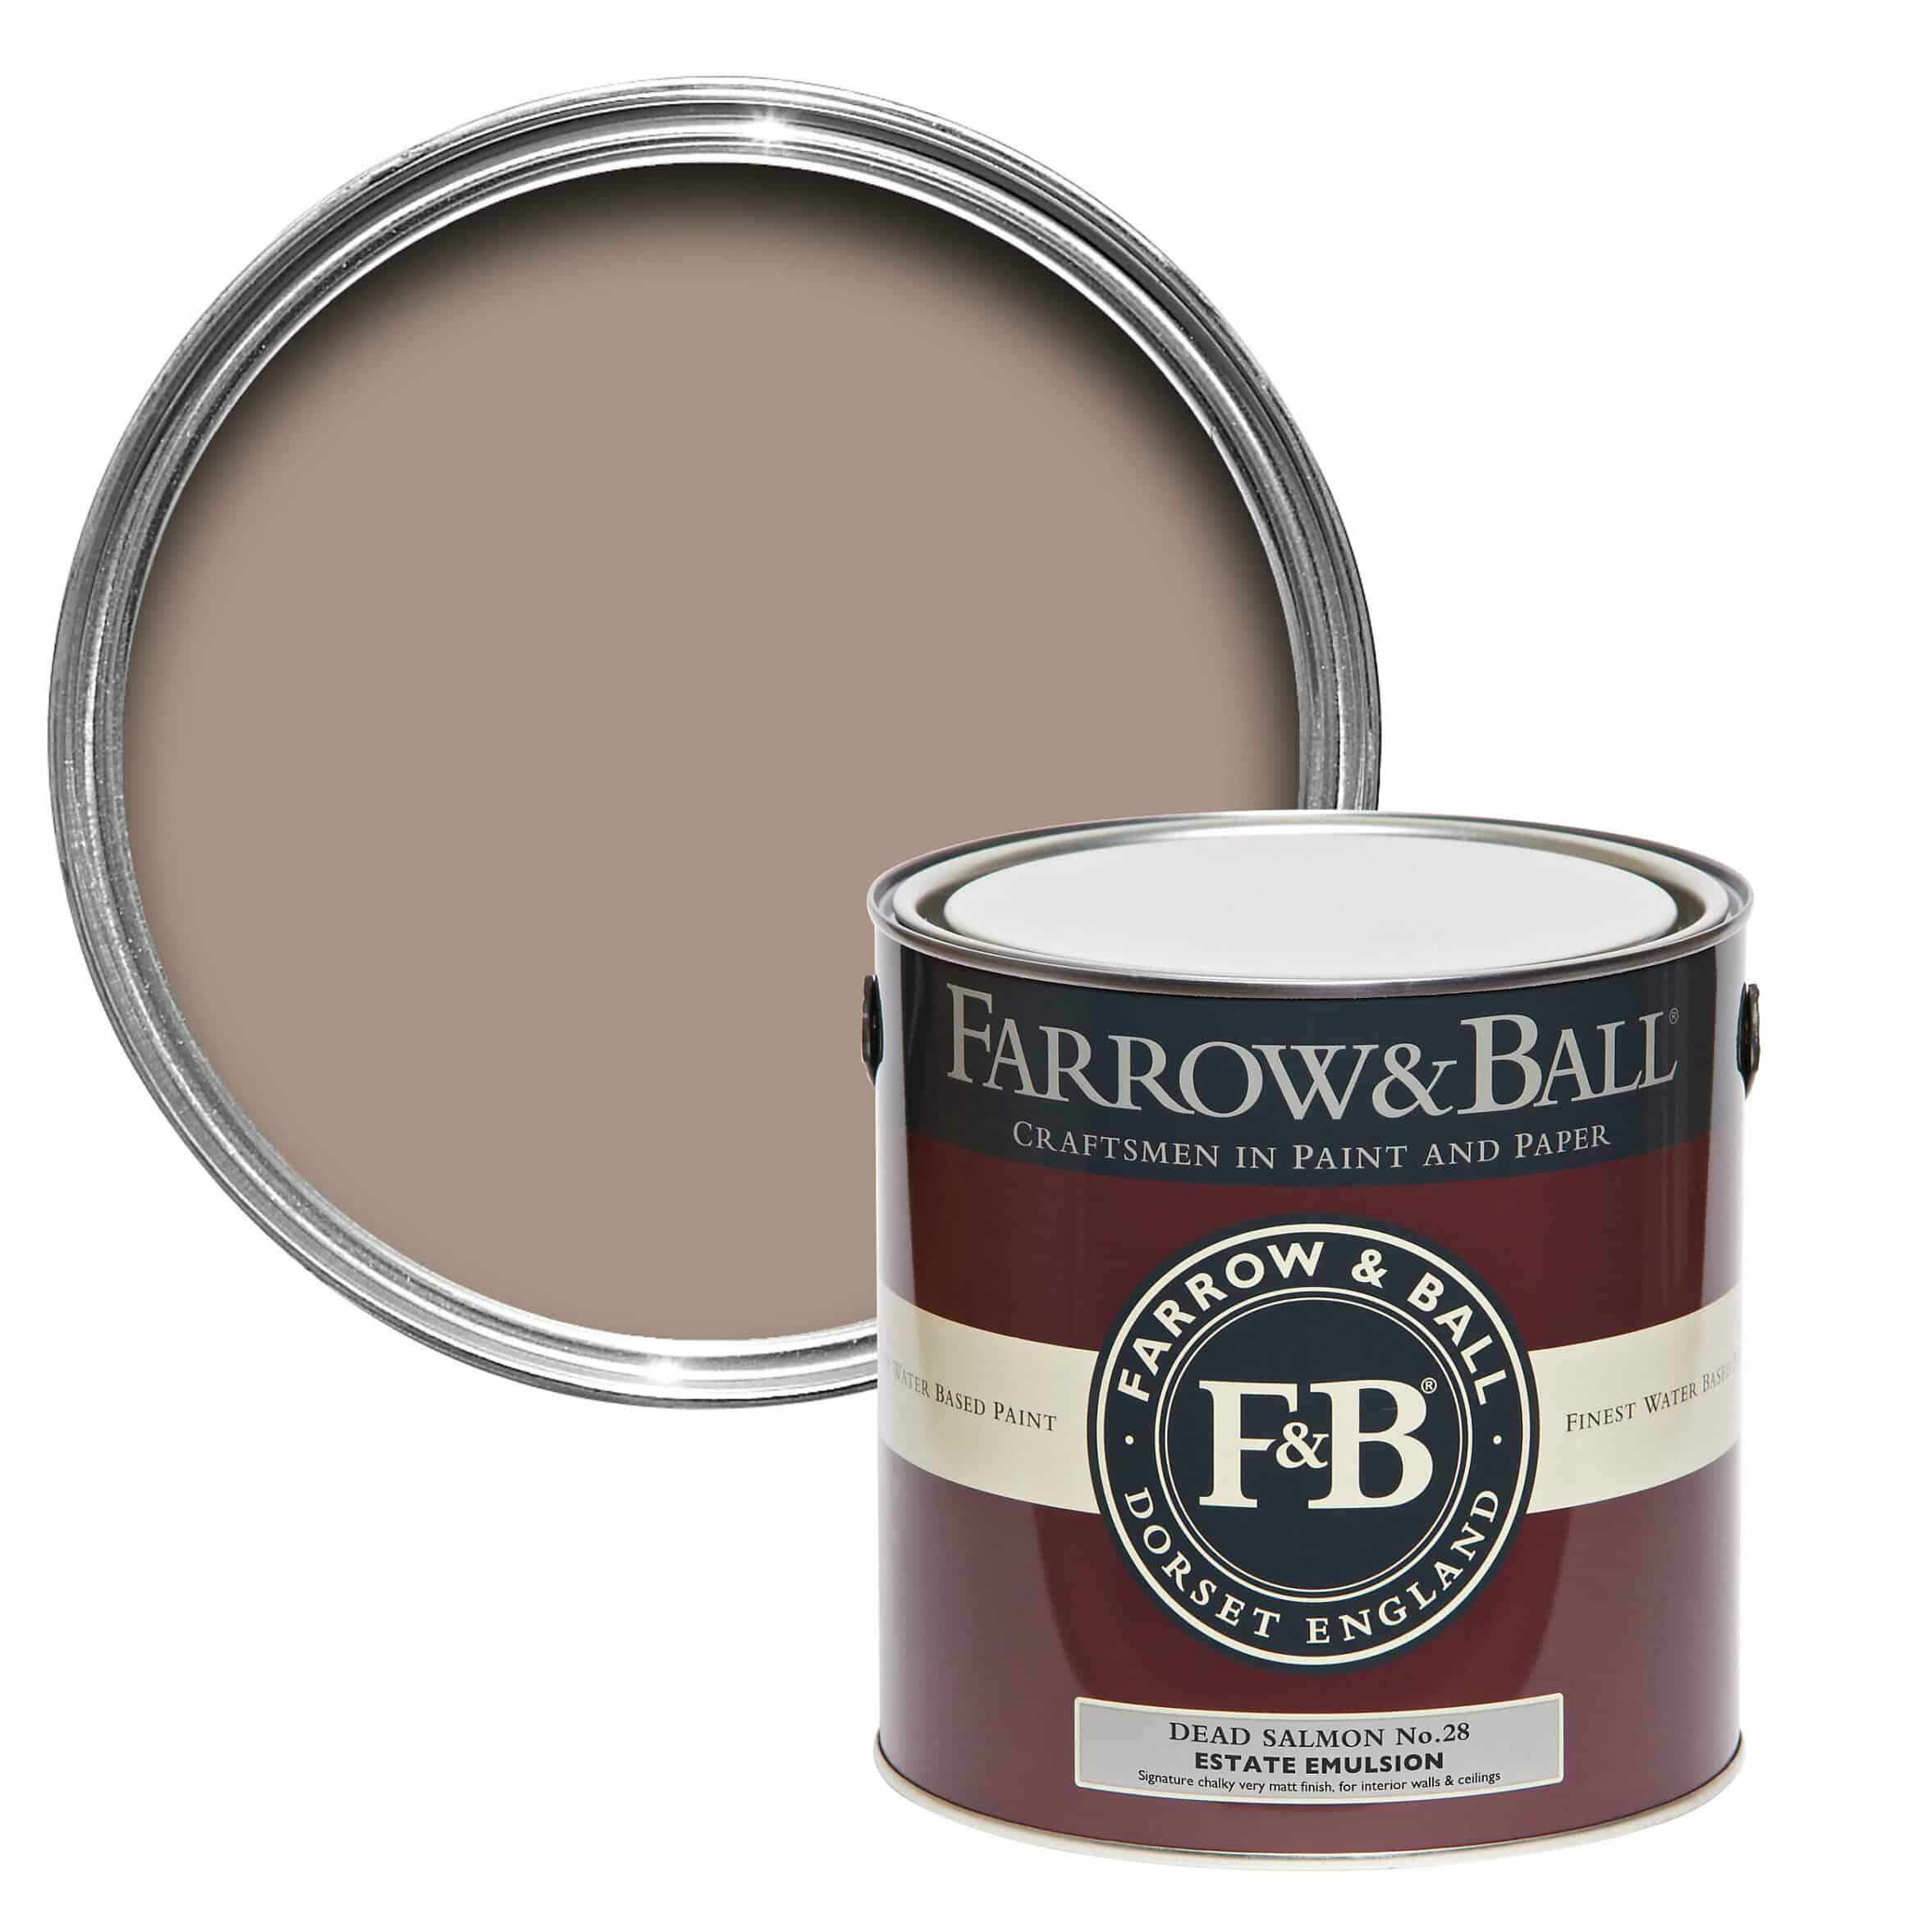 Farrow & Ball Estate Dead salmon No.28 Matt Emulsion paint, 2.5L-2827